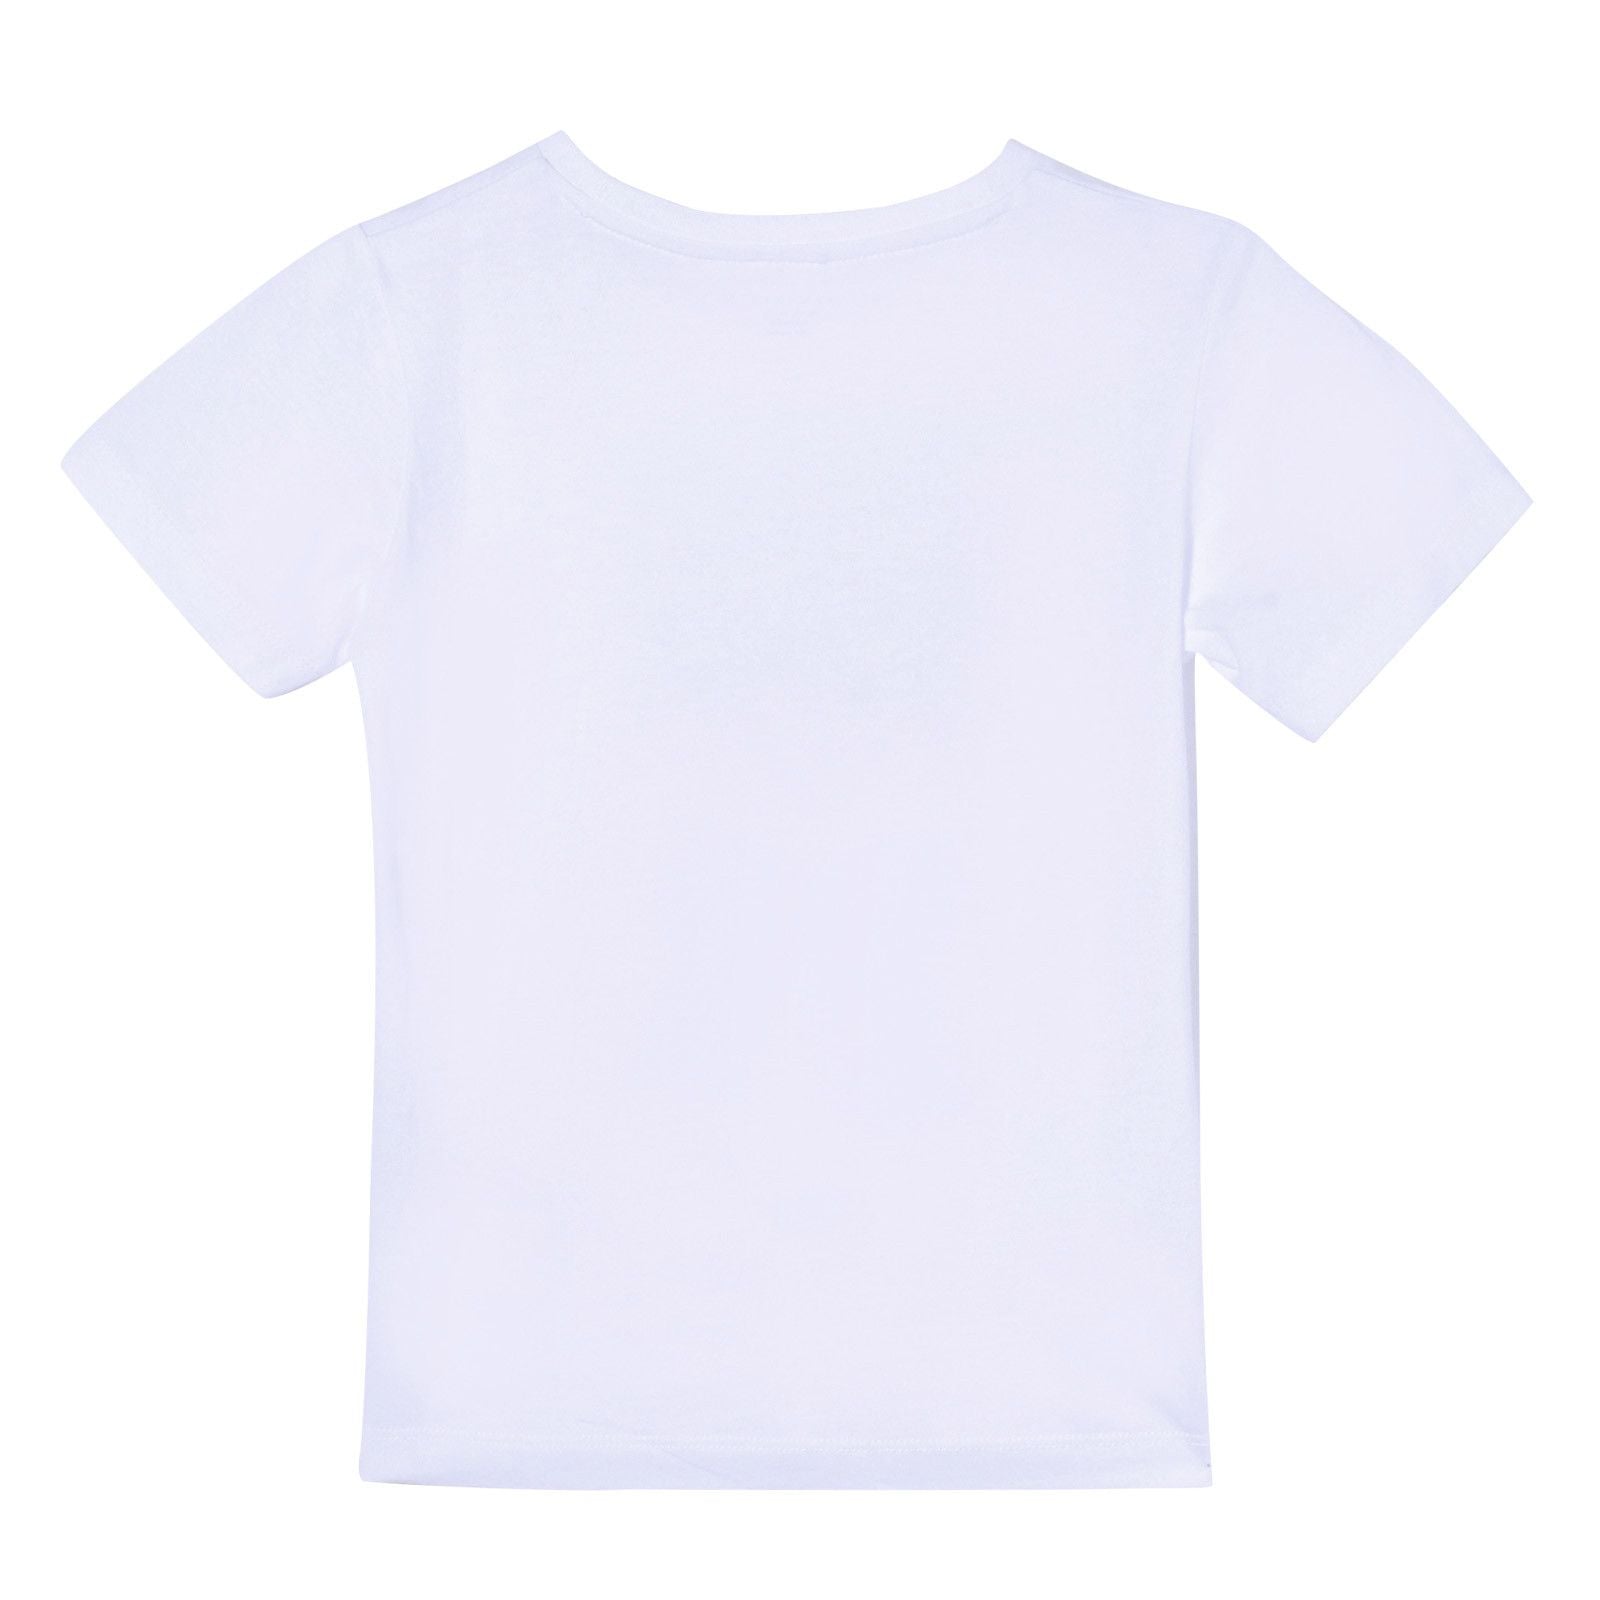 Girls White Rainbow And Bow printed Cotton T-Shirt - CÉMAROSE | Children's Fashion Store - 2